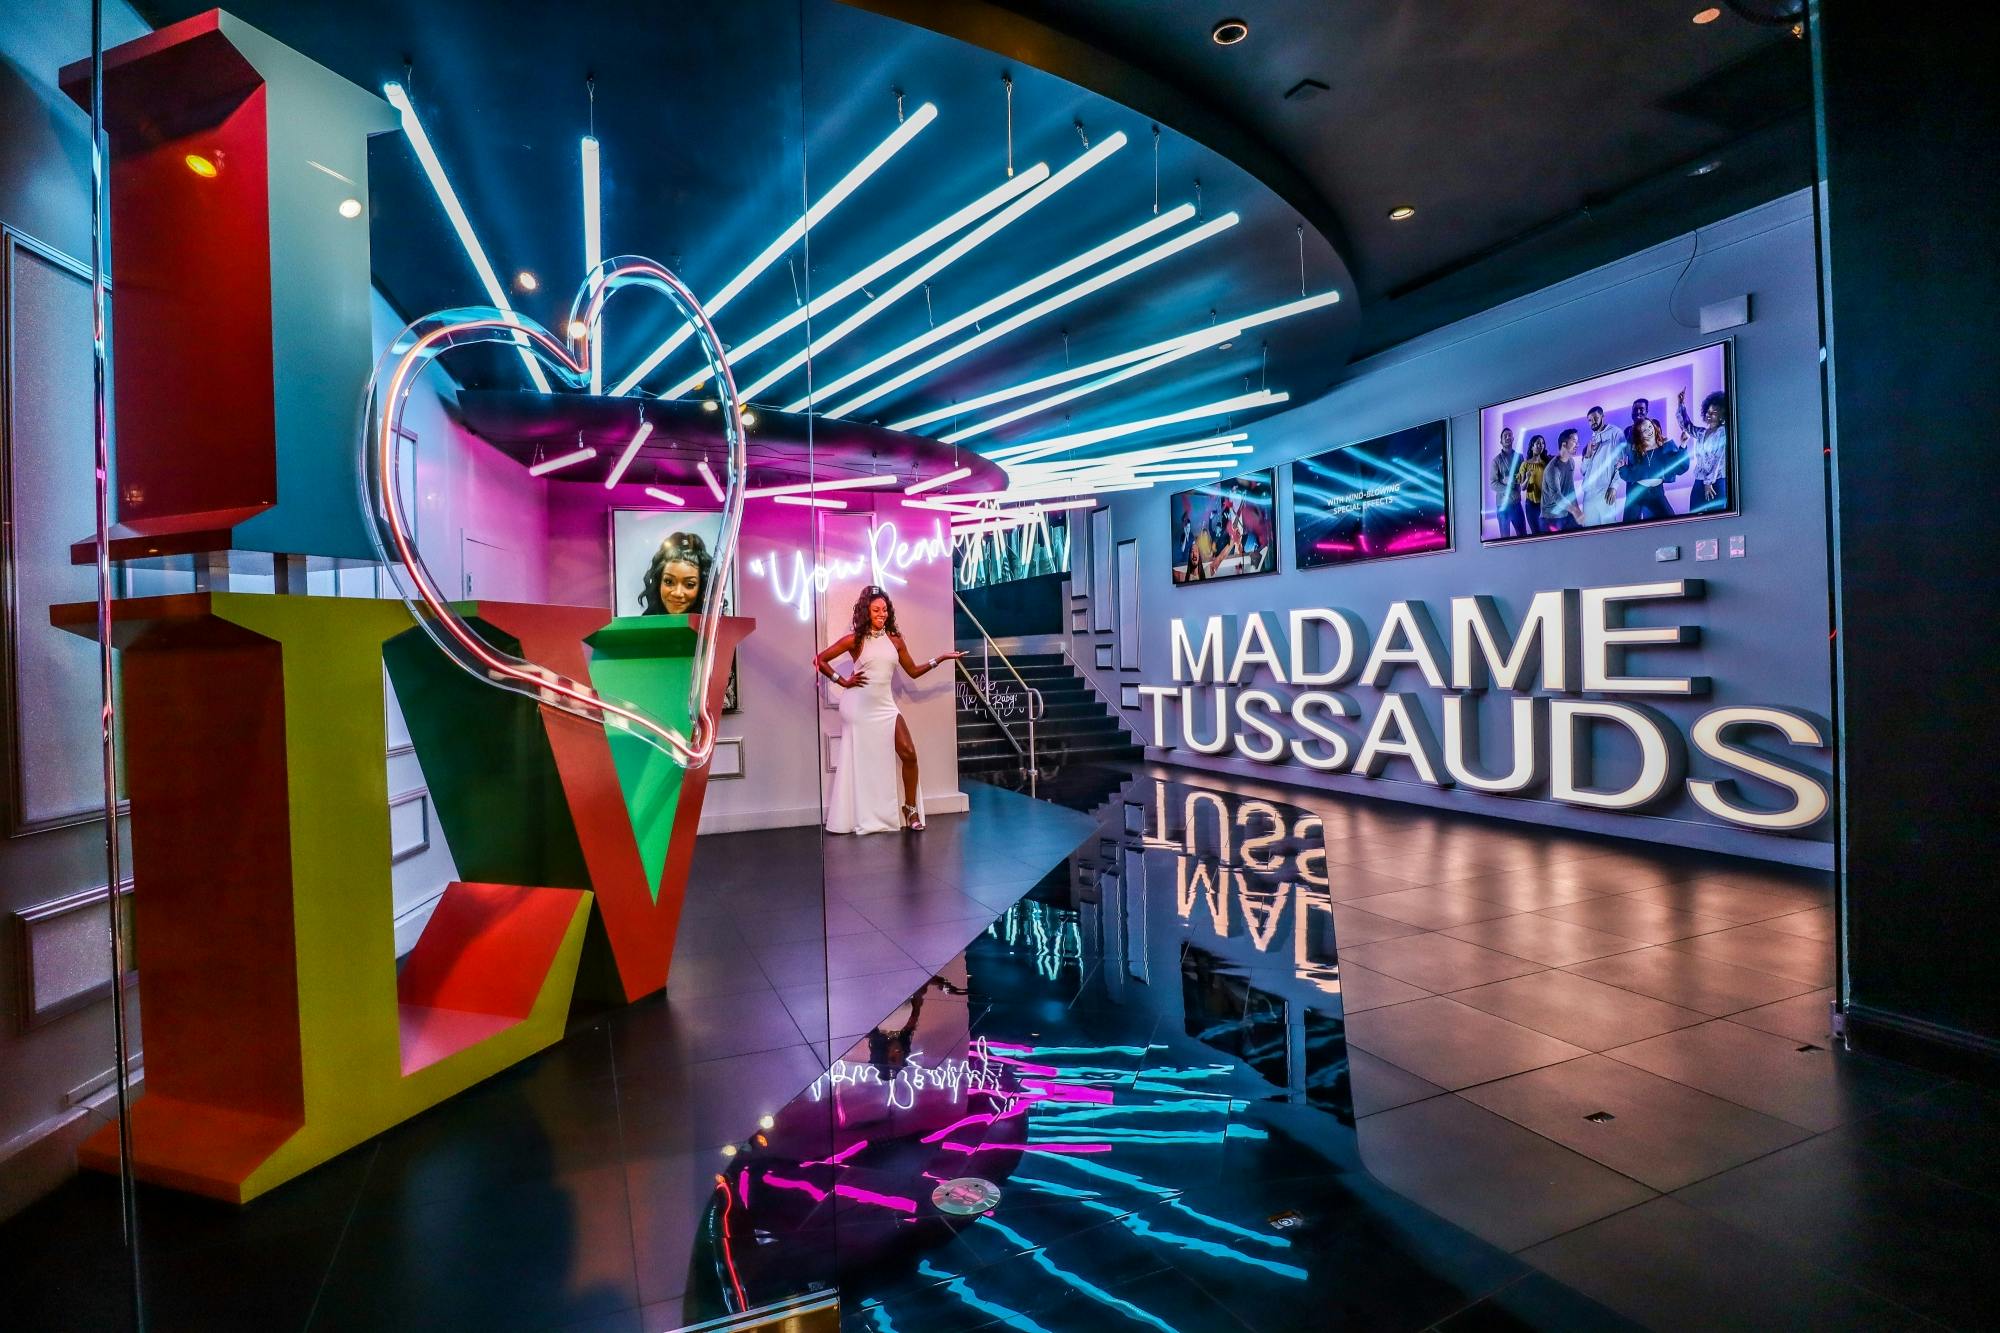 Madame Tussauds Las Vegas con Marvel 4D e 7D Experience